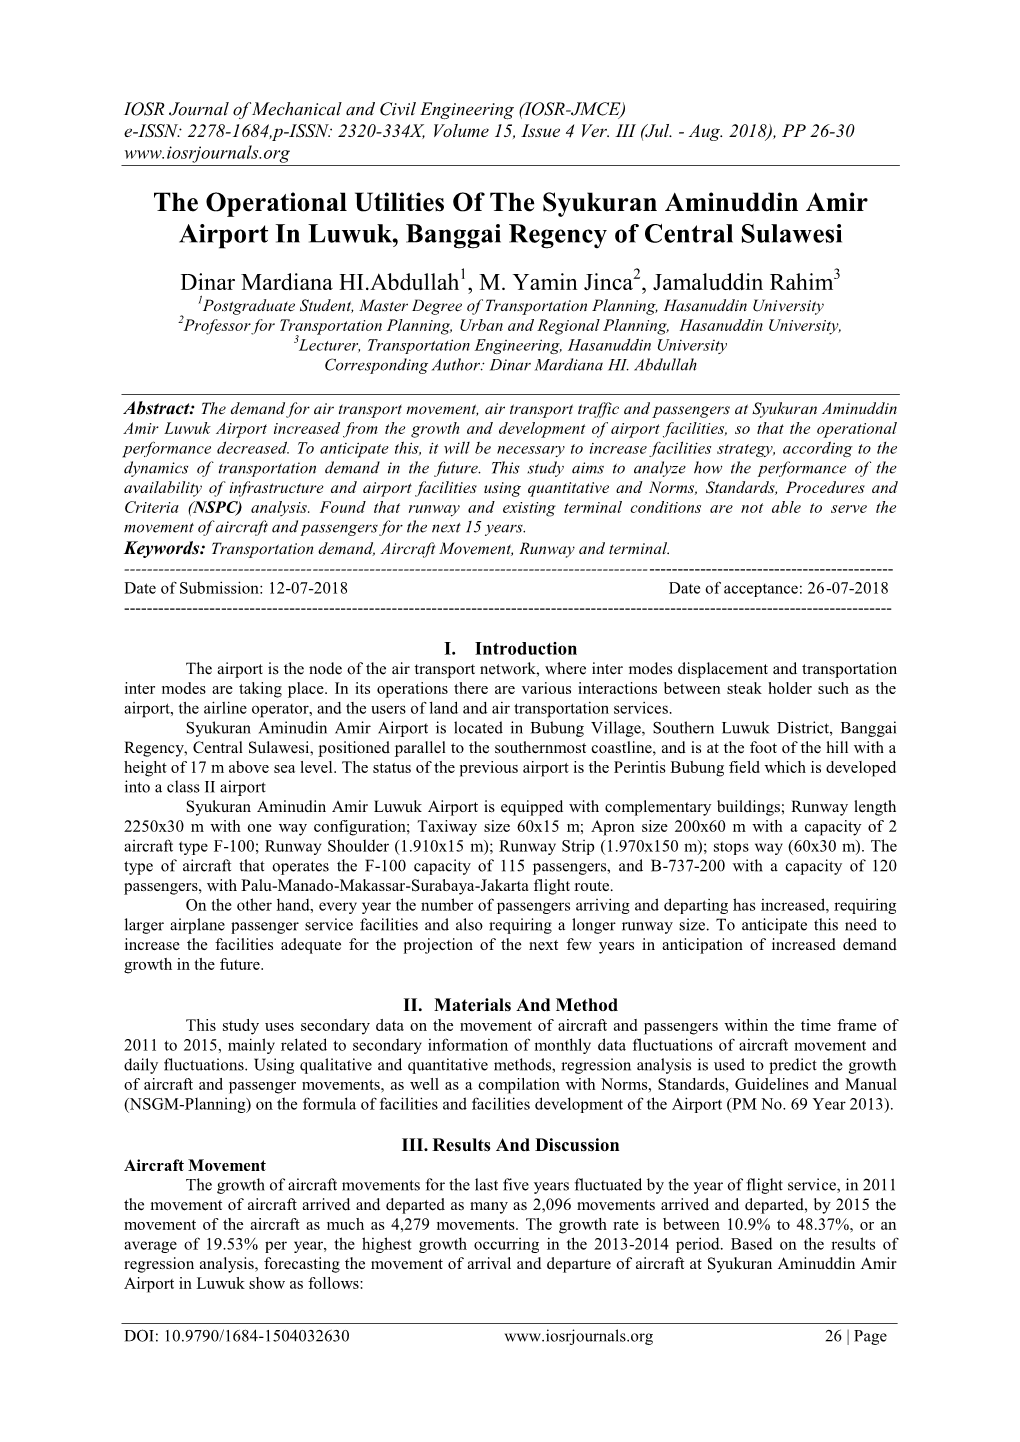 The Operational Utilities of the Syukuran Aminuddin Amir Airport in Luwuk, Banggai Regency of Central Sulawesi